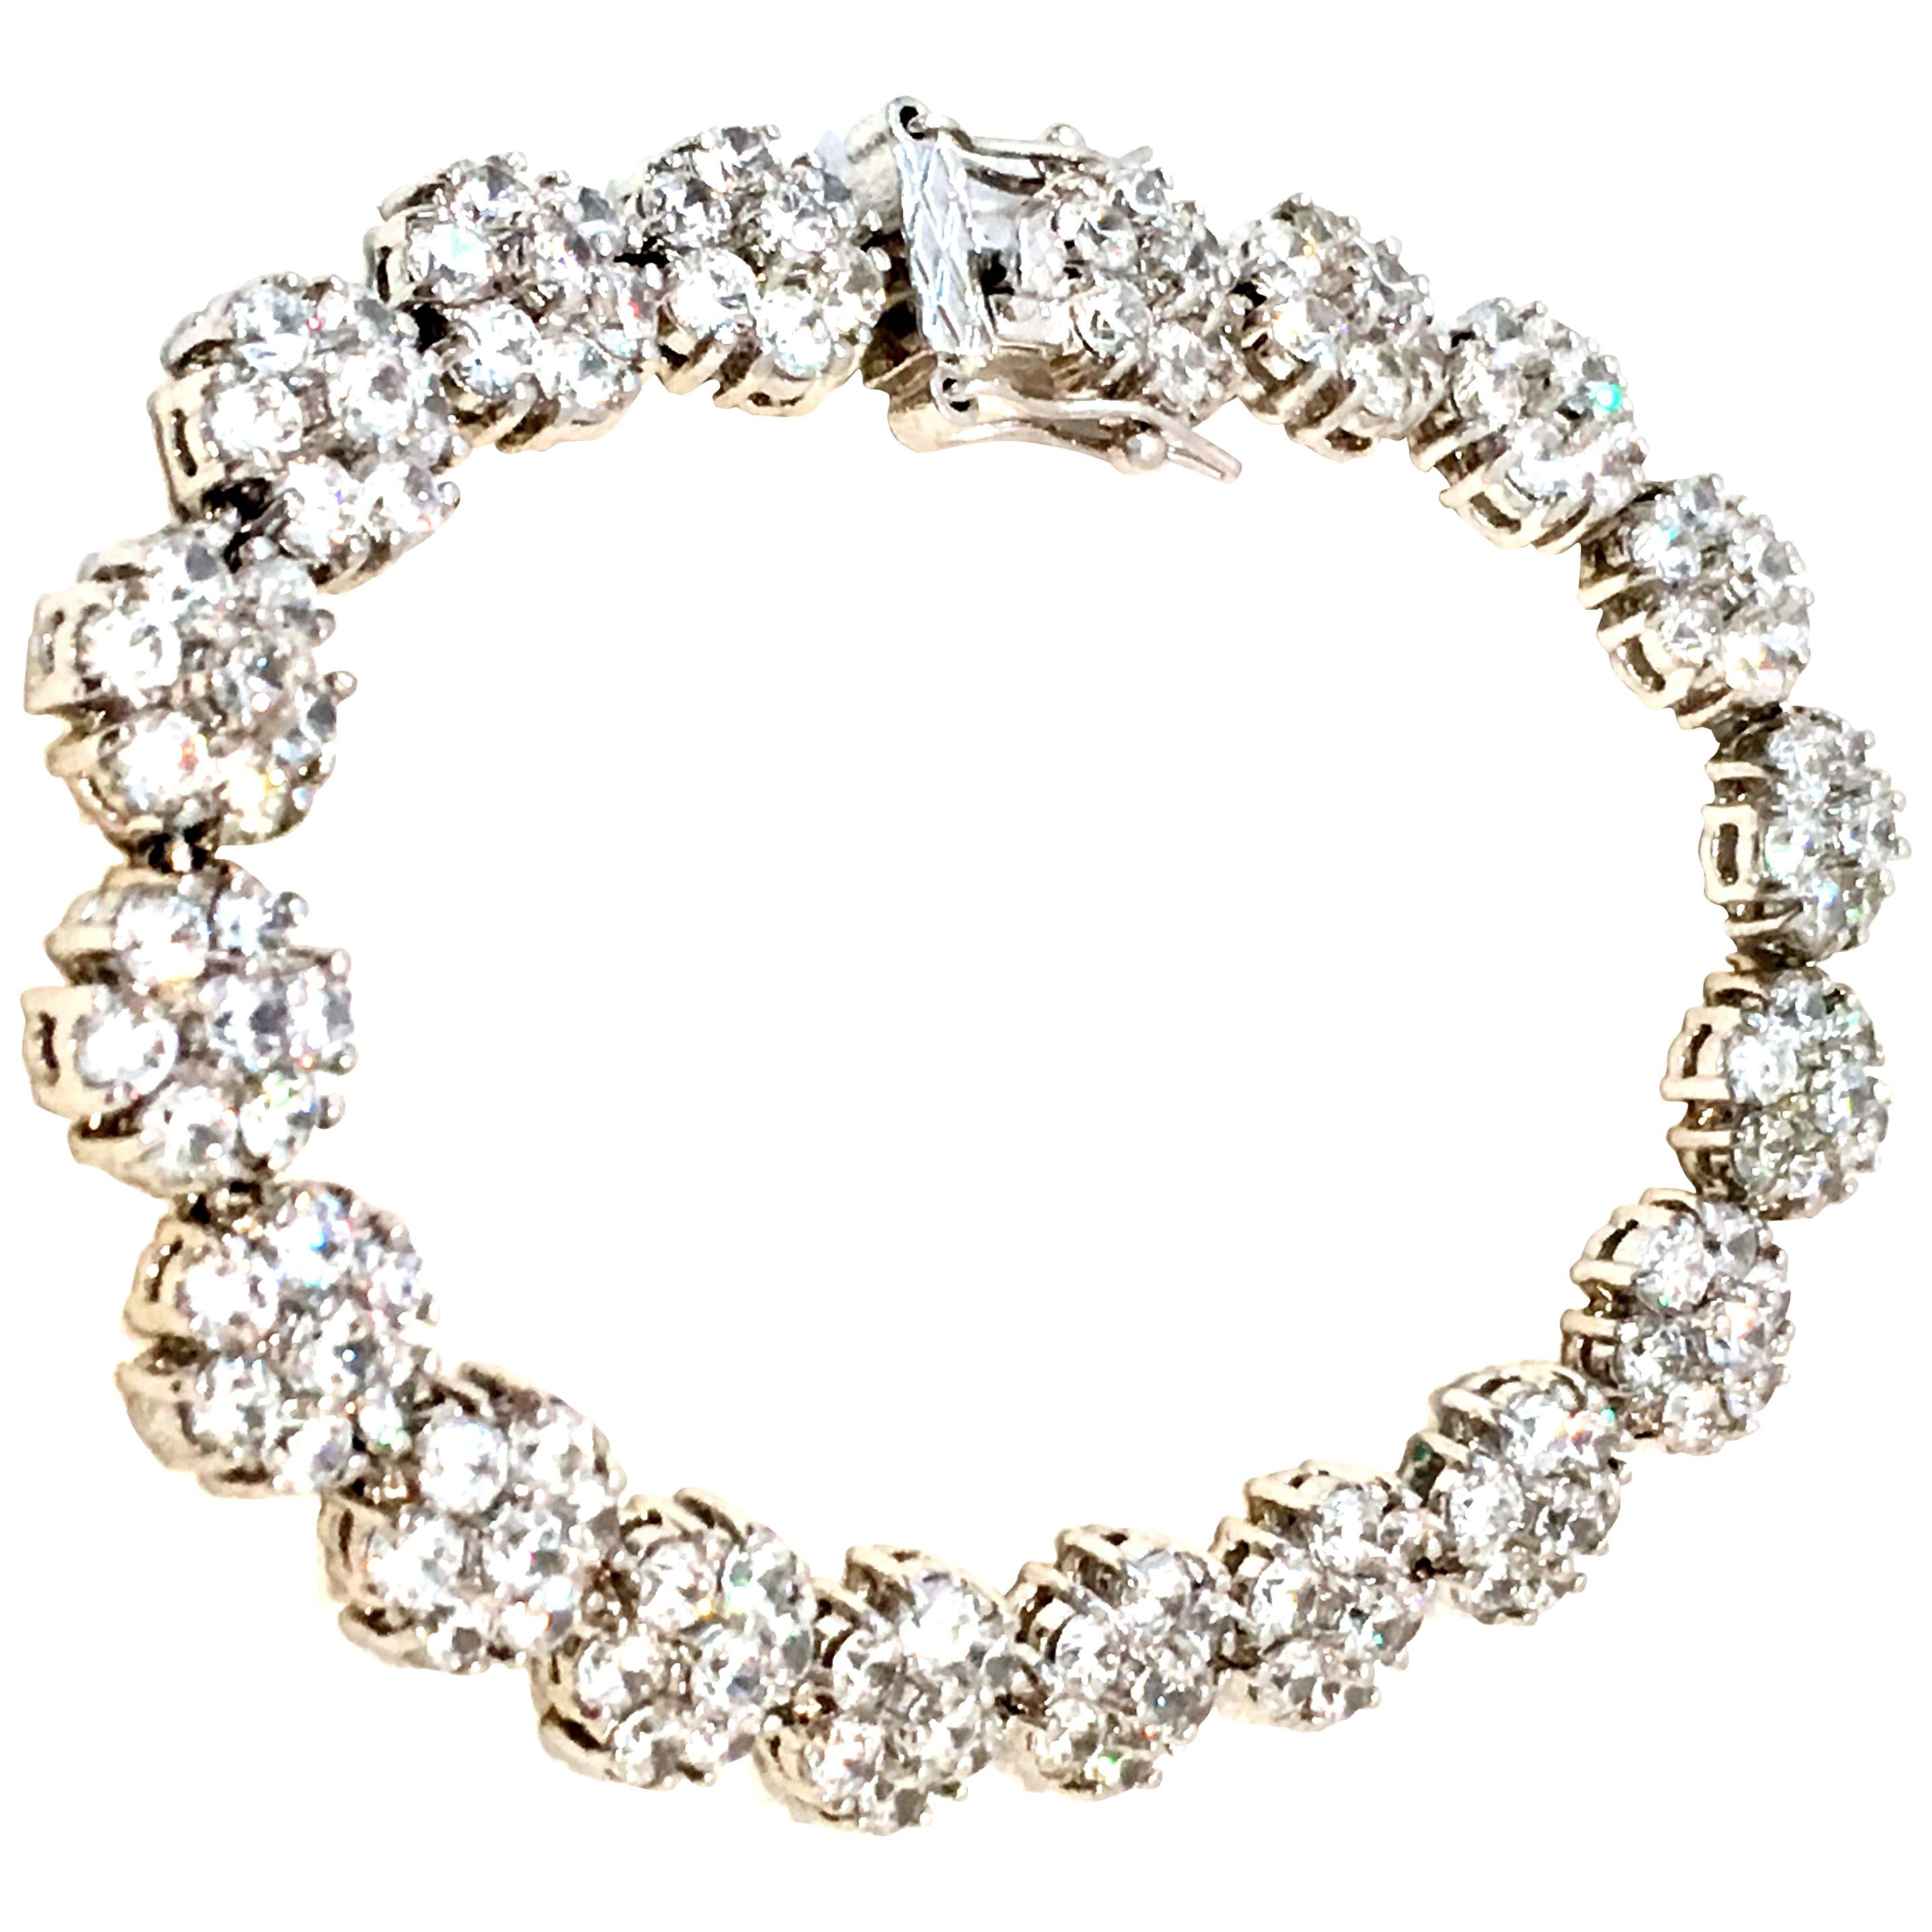 21st Century Silver Plate & Swarovski Crystal "Flower" Link Tennis Bracelet